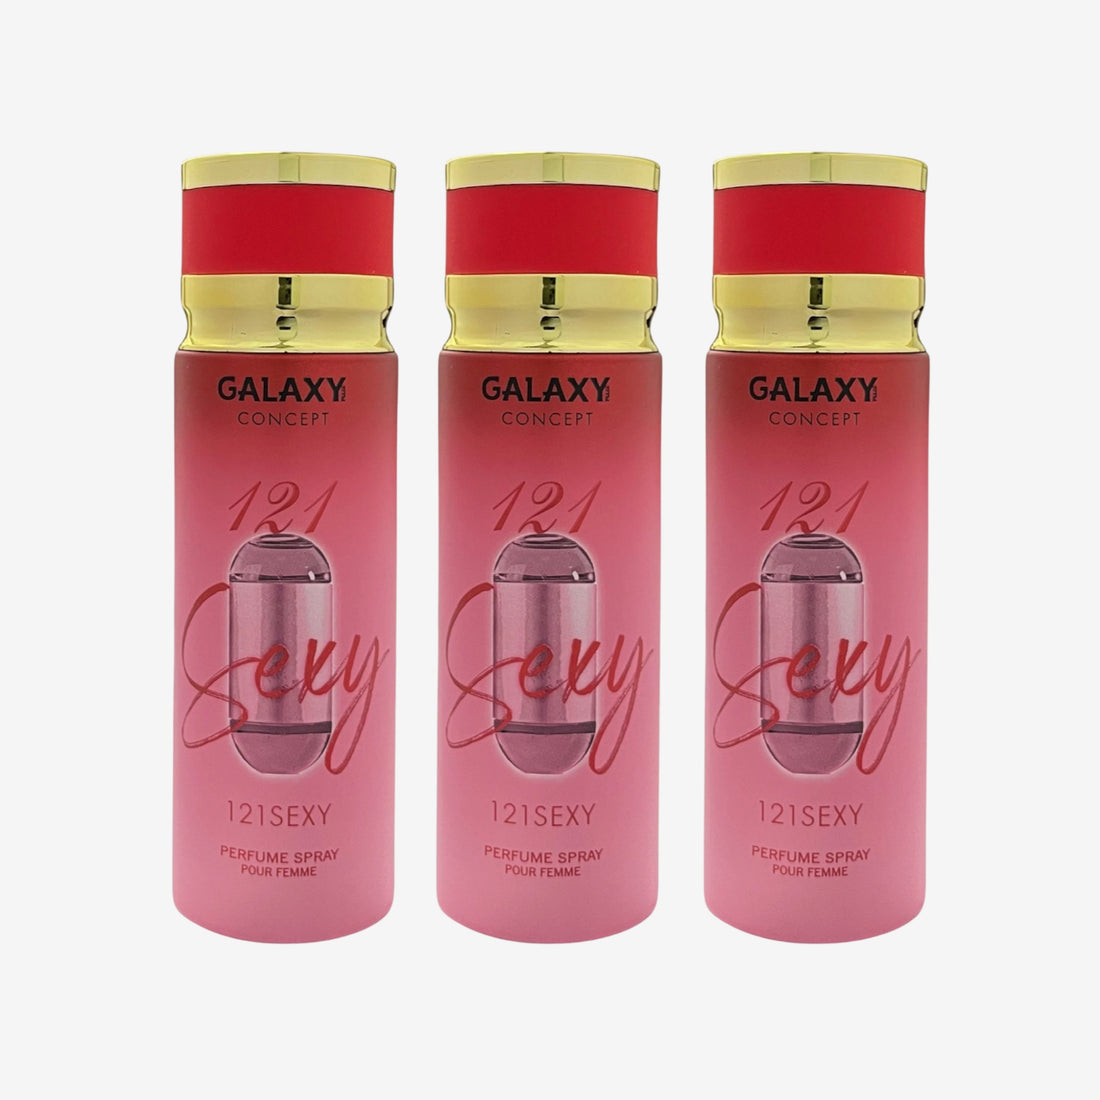 Galaxy Plus Concept 121 SEXY Perfume Body Spray - Inspired By 212 Sexy